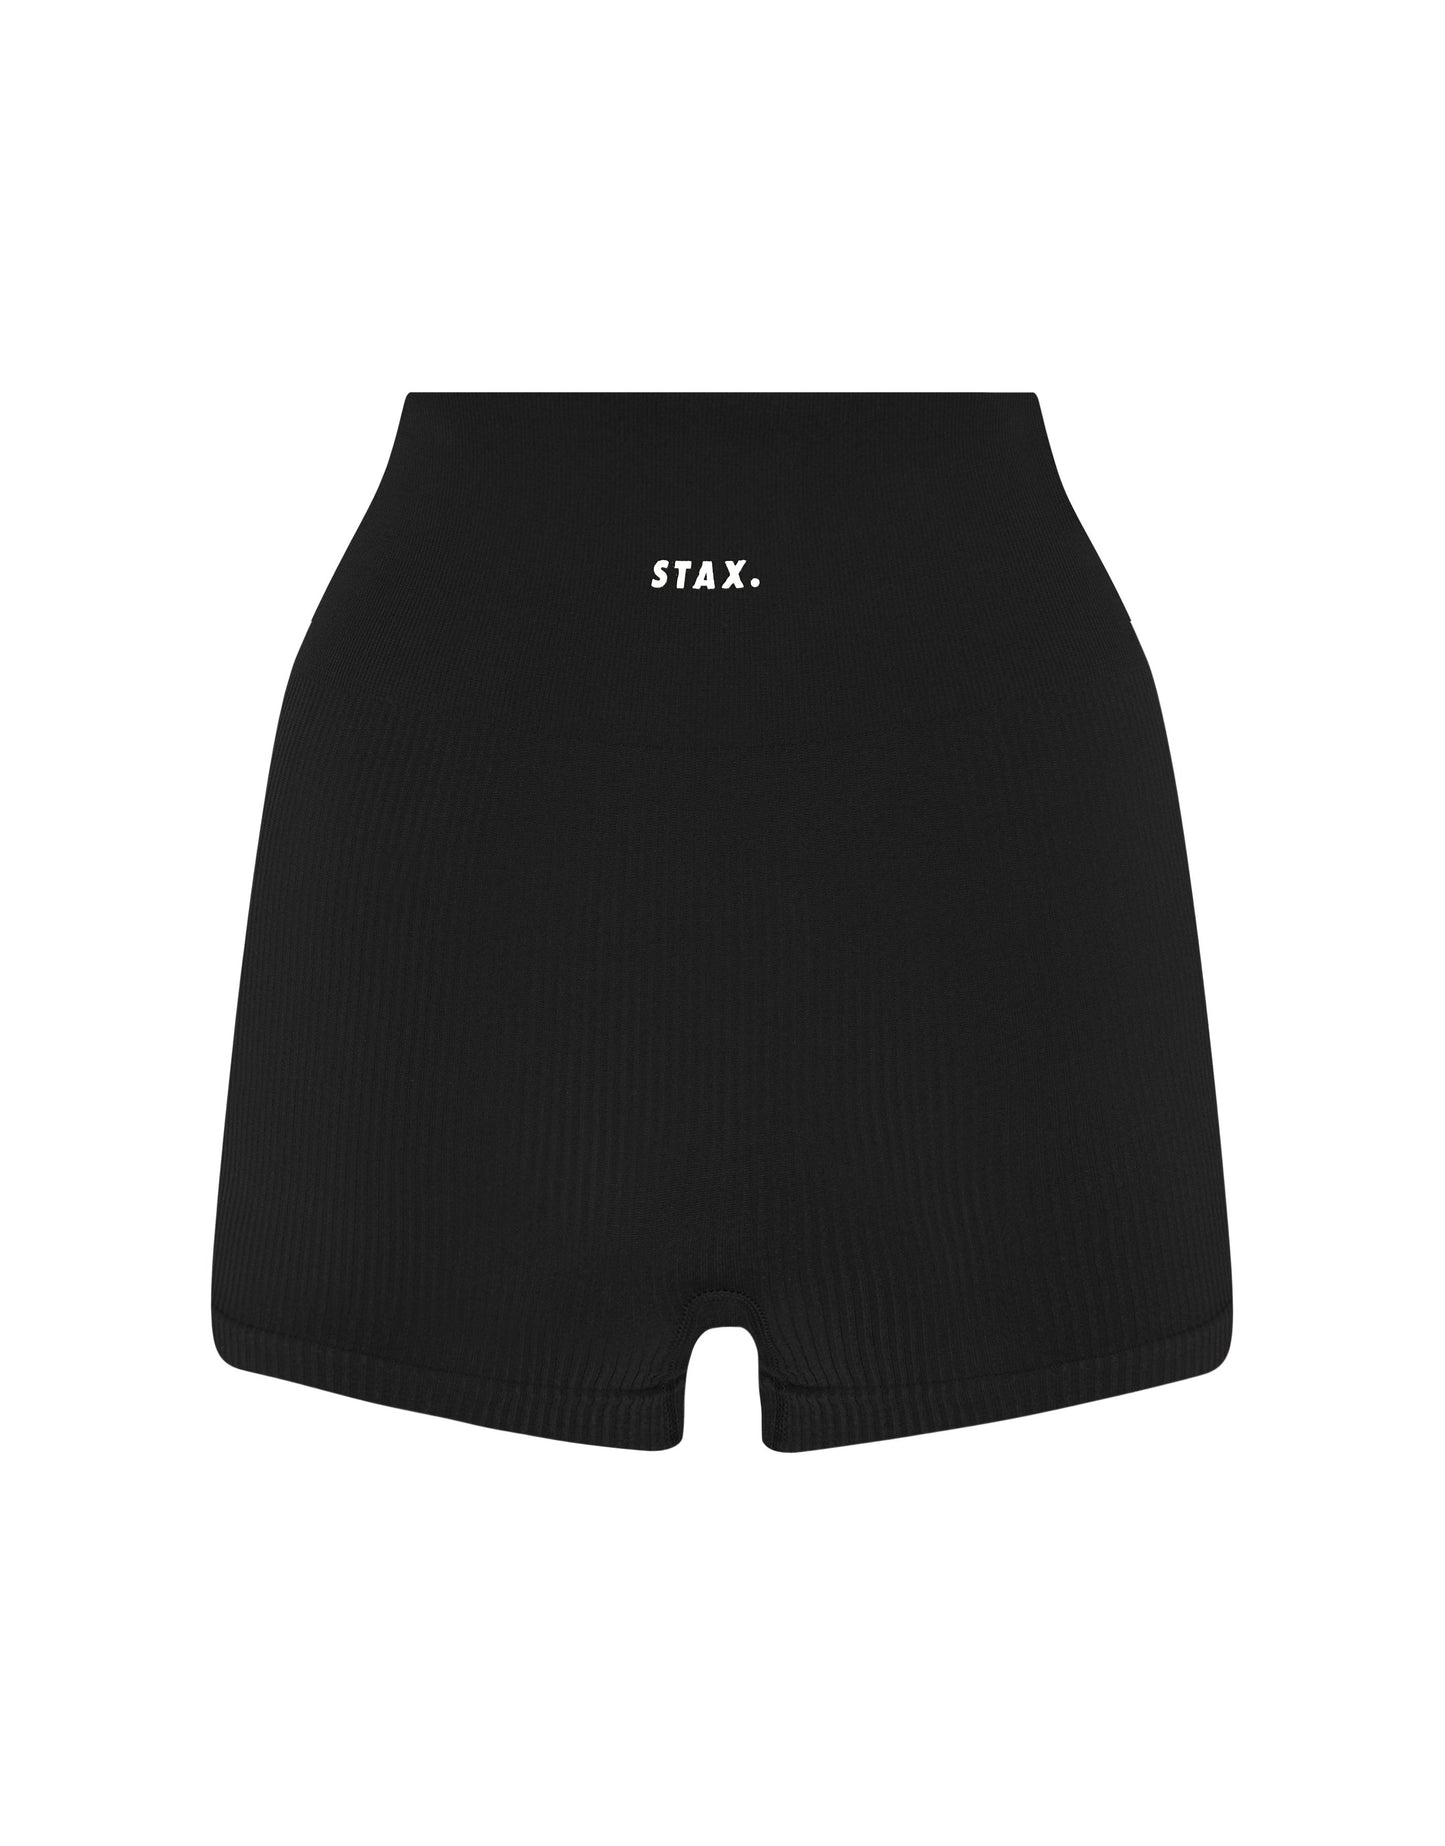 STAX. Premium Seamless V5.1 (Favourites) Mini Lounge Shorts - Astro (Black)